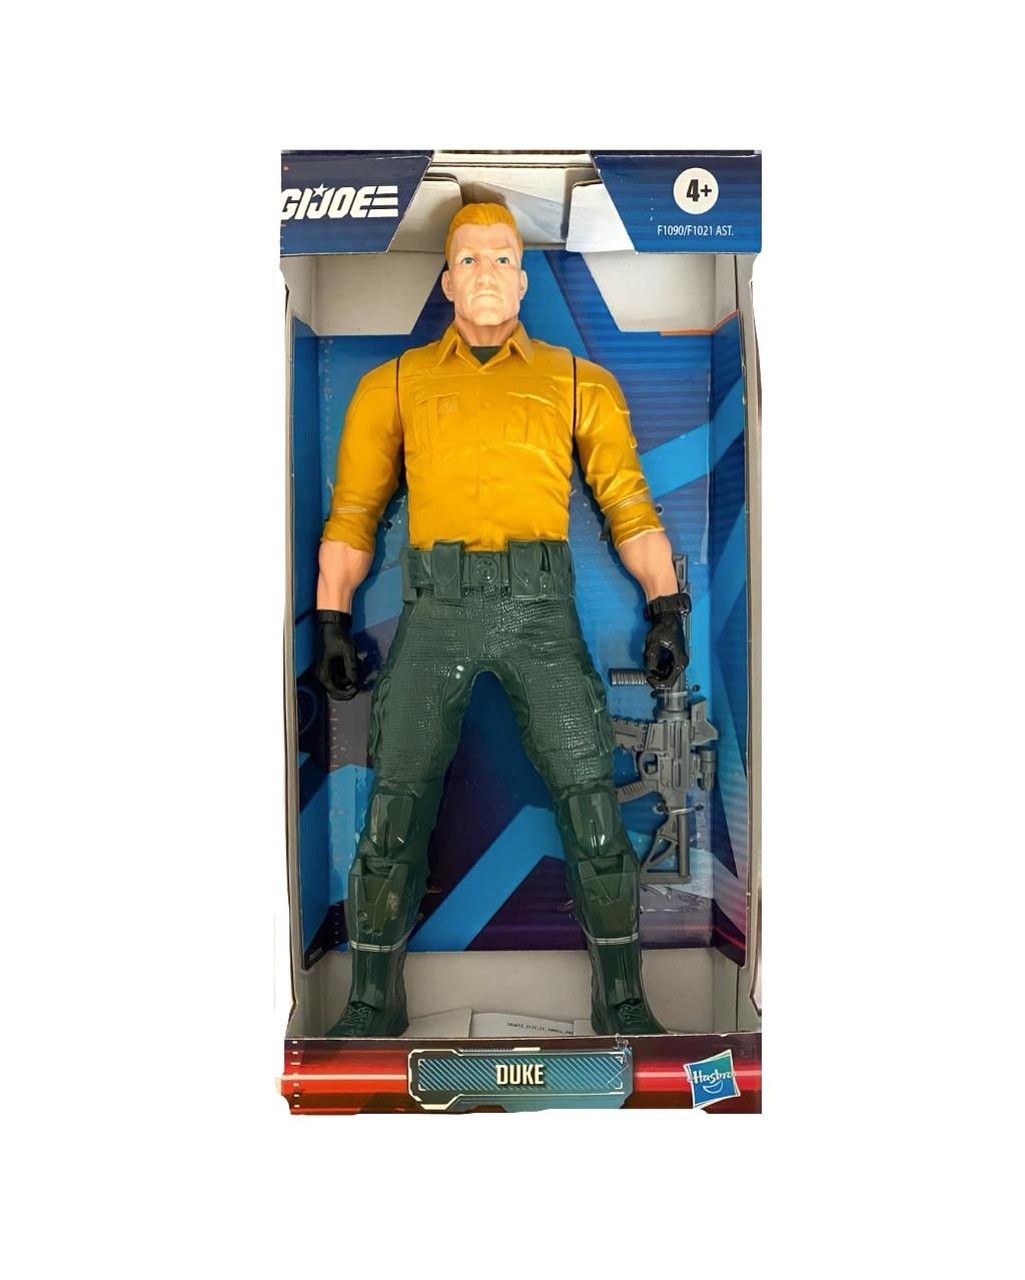 Boneco Duke G.I. Joe 25 Cm Hasbro F1021